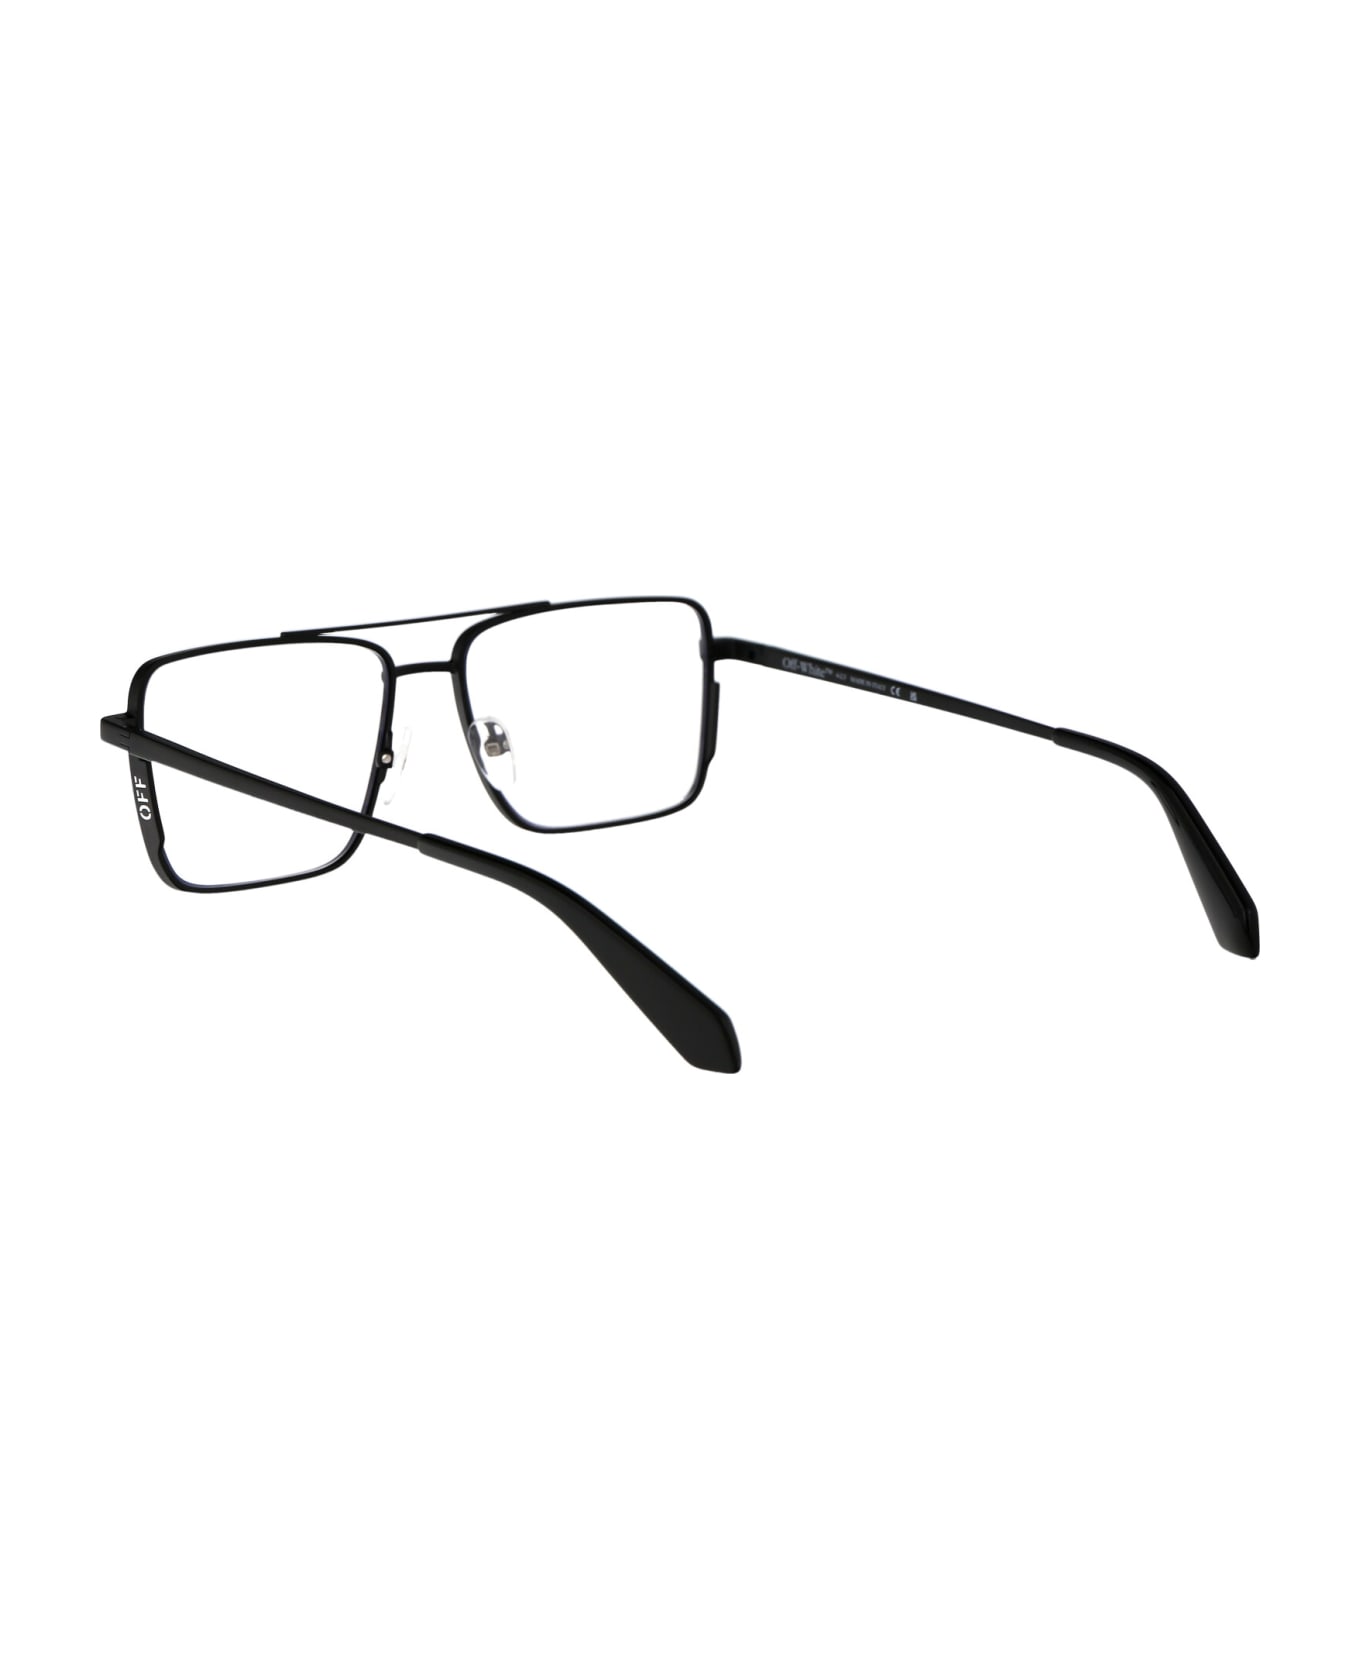 Off-White Optical Style 66 Glasses - 1000 BLACK